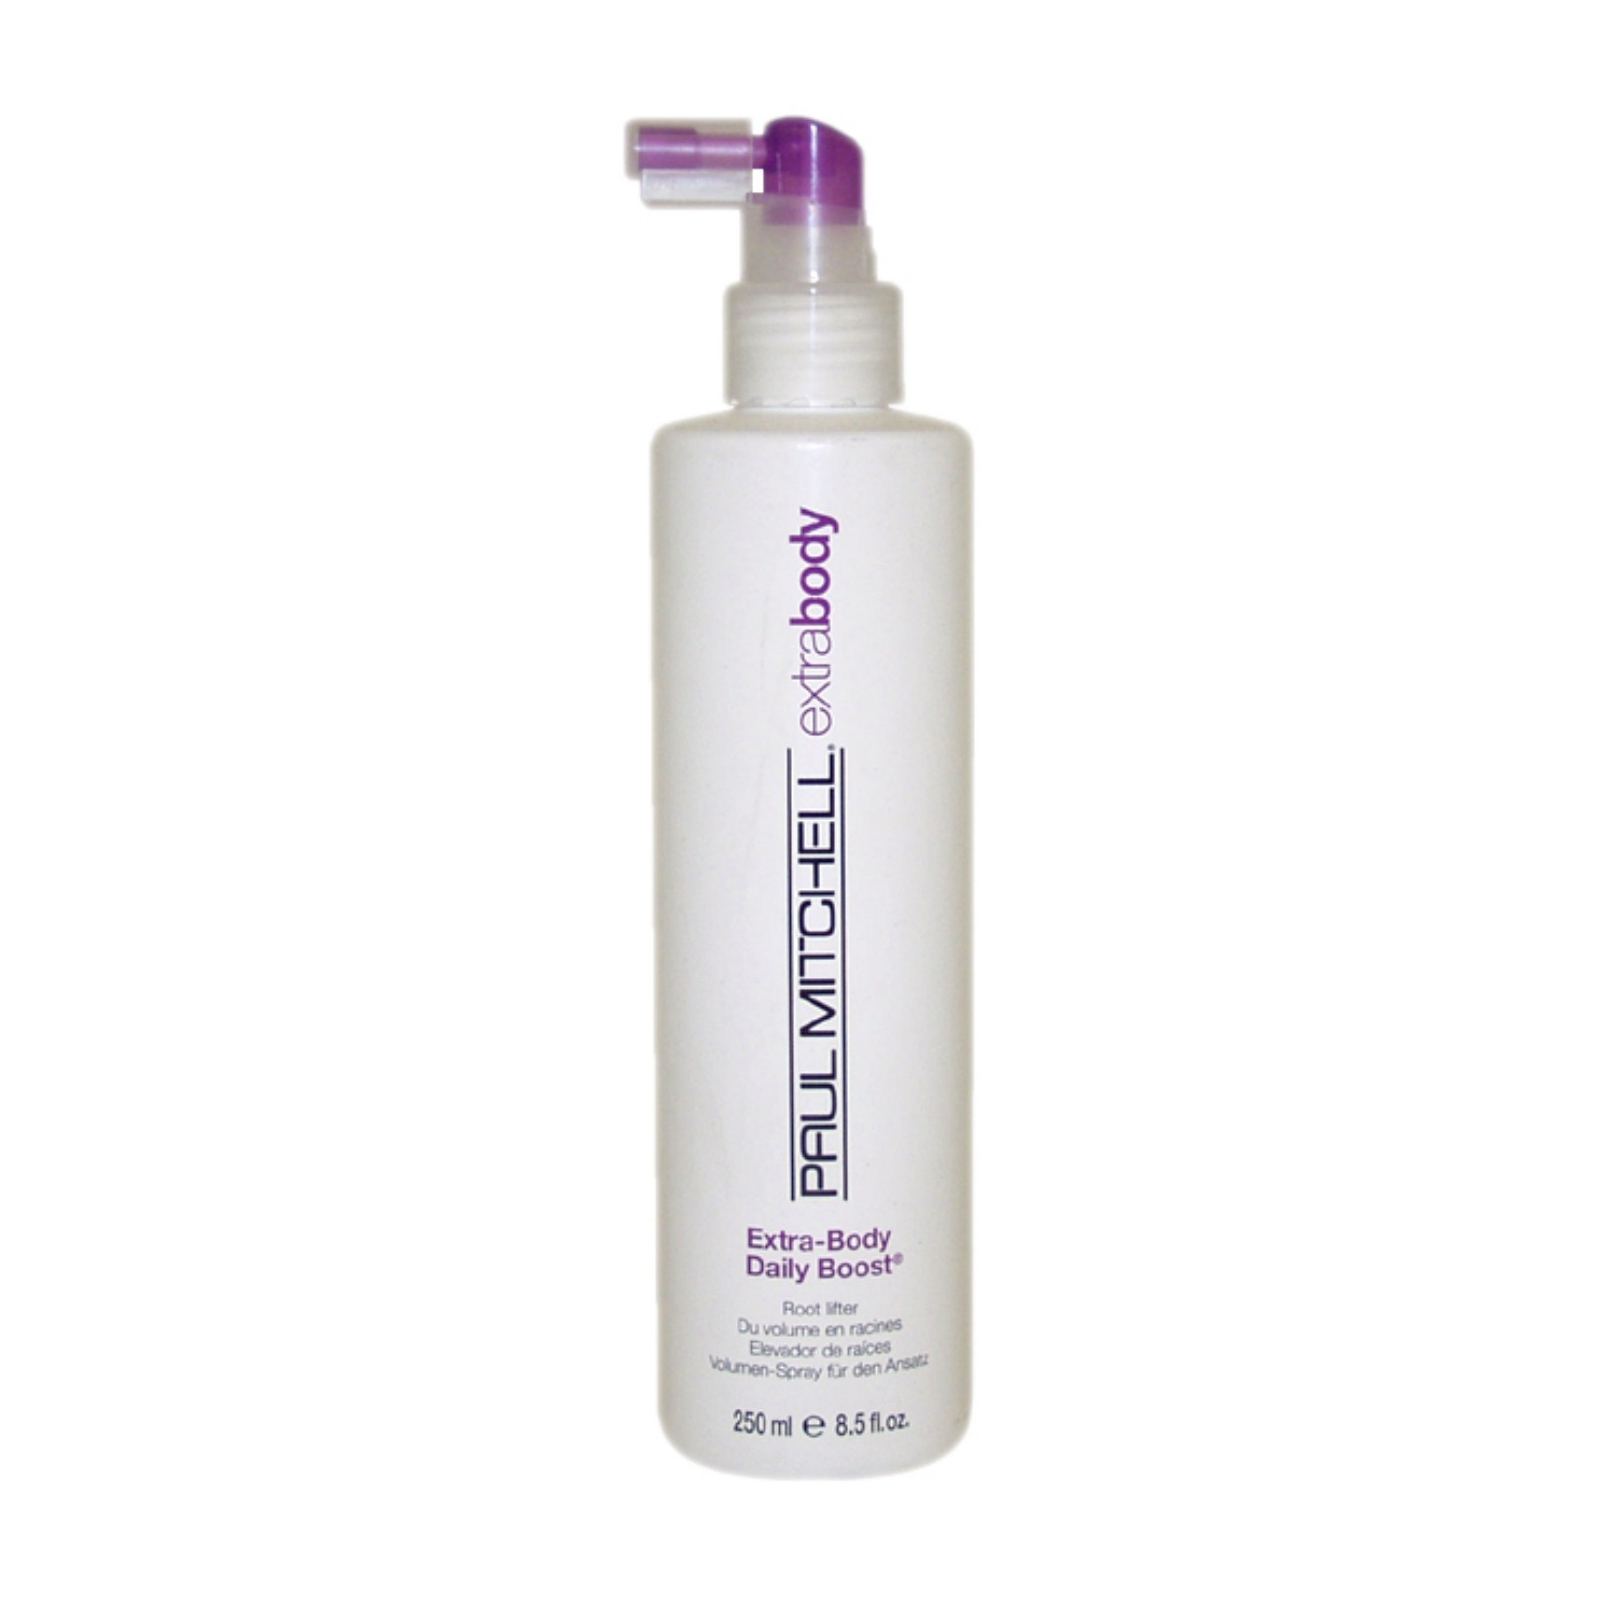 Paul Mitchell Extra- Body Daily Boost Spray by  for Unisex - 8.5 oz Hair Spray